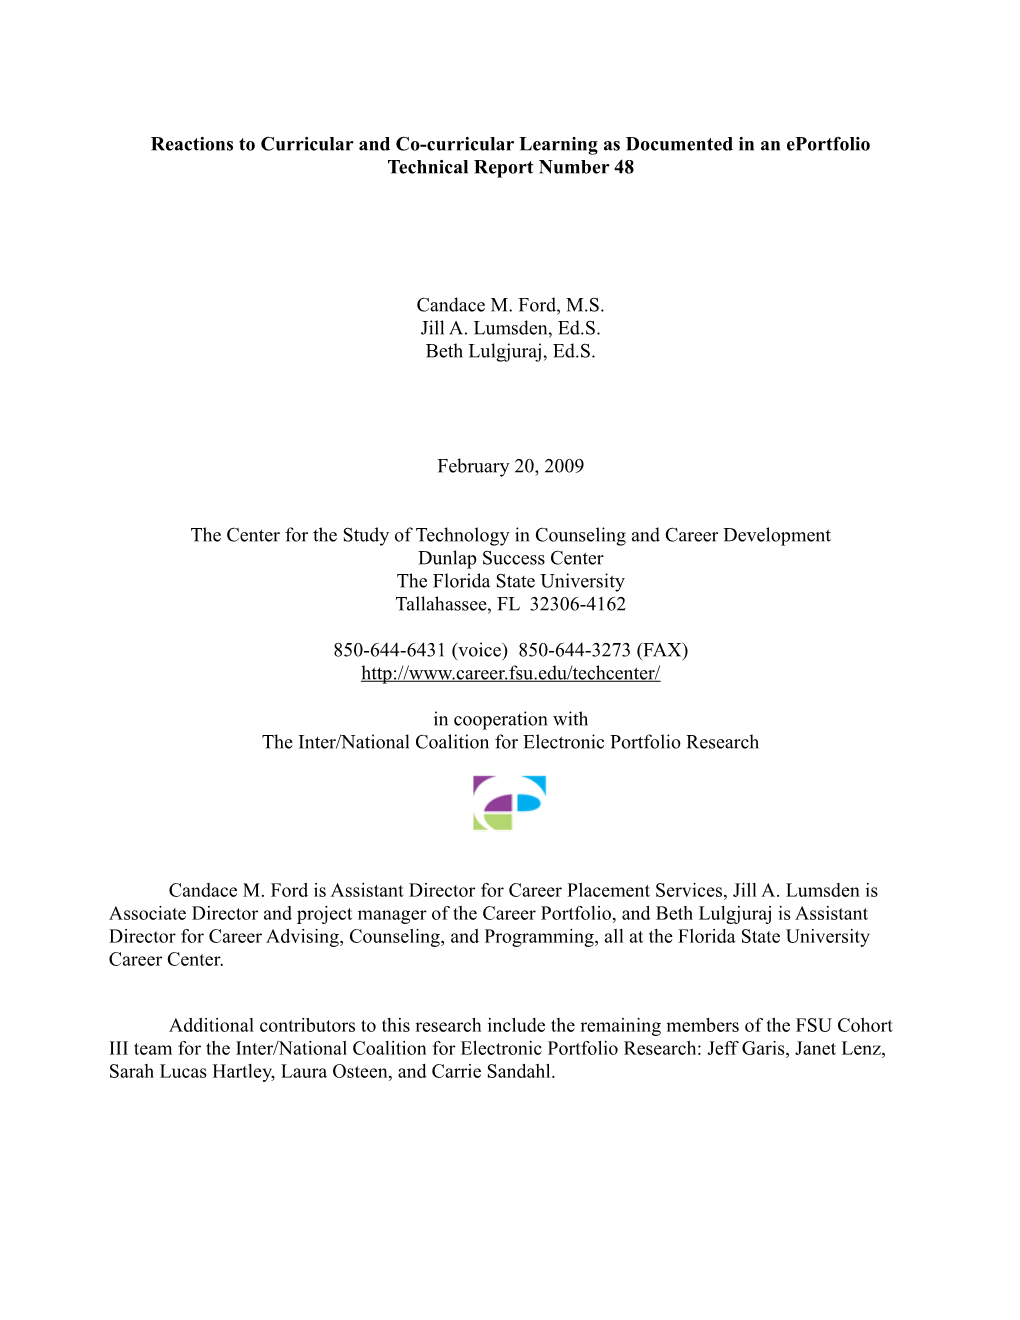 NCEPR Final Report (Title TBA)